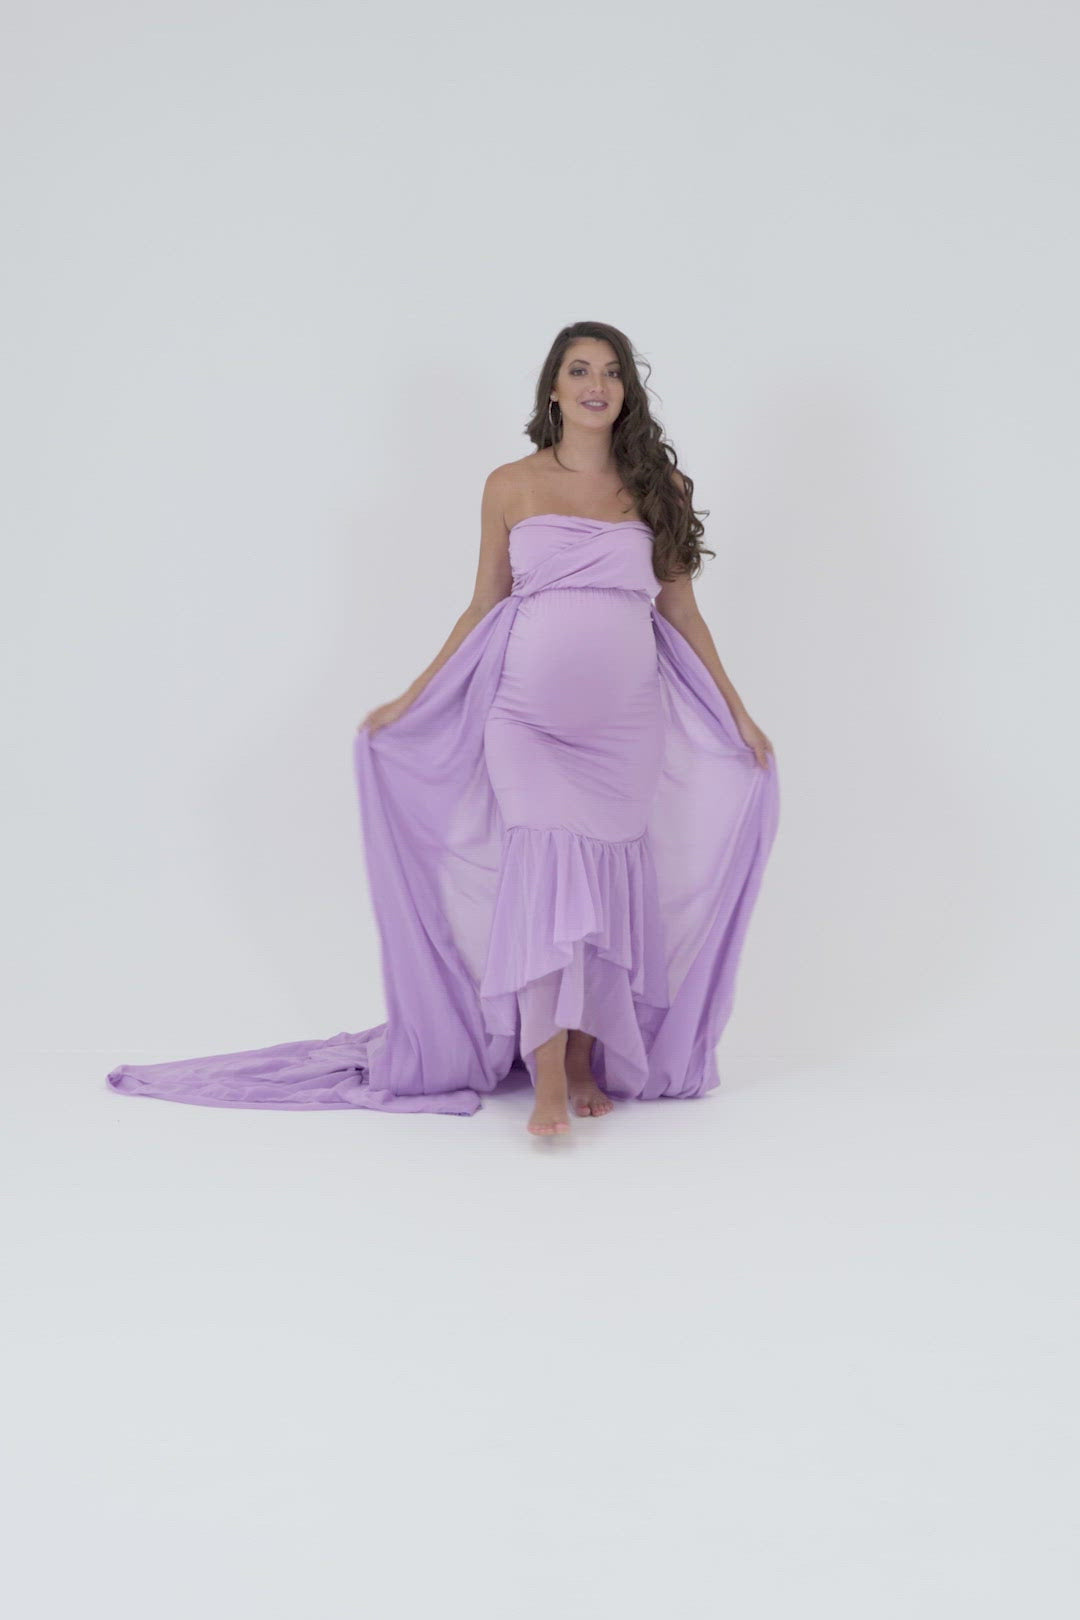 pregnancy photoshoot dresses - Purple gown